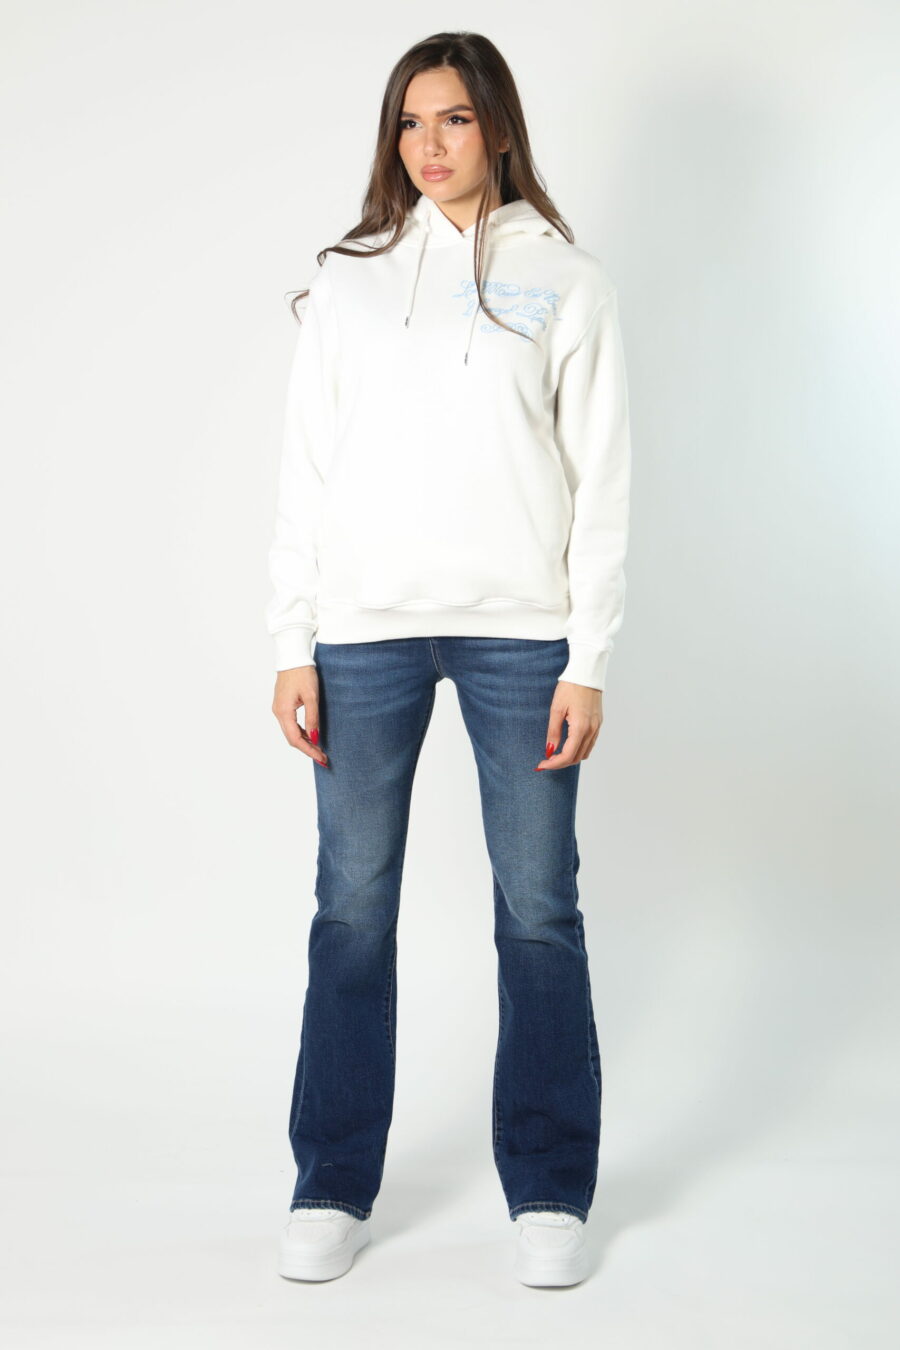 White hooded sweatshirt with mini logo "kenzo travel" - 8052865435499 336 scaled